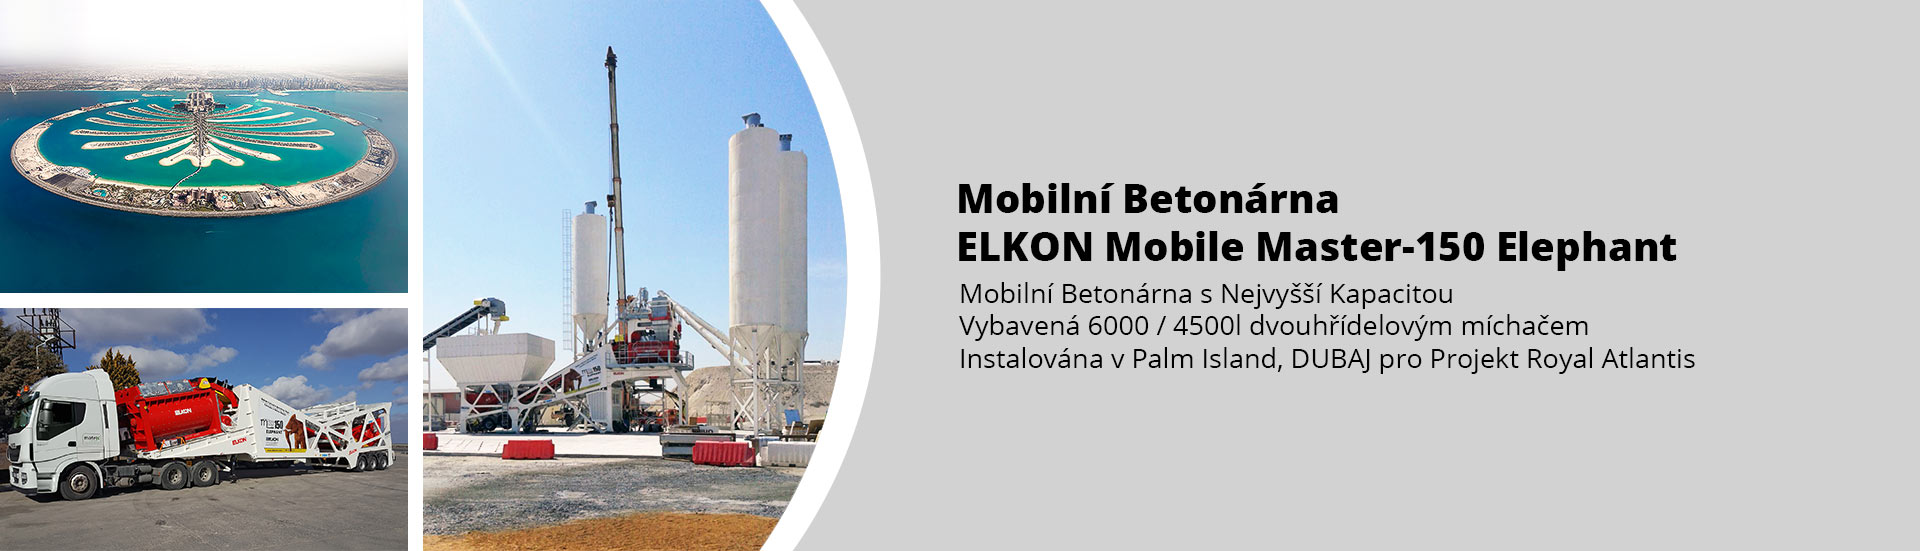 8-Elkon-Mobile-Master-150-Elephant_8